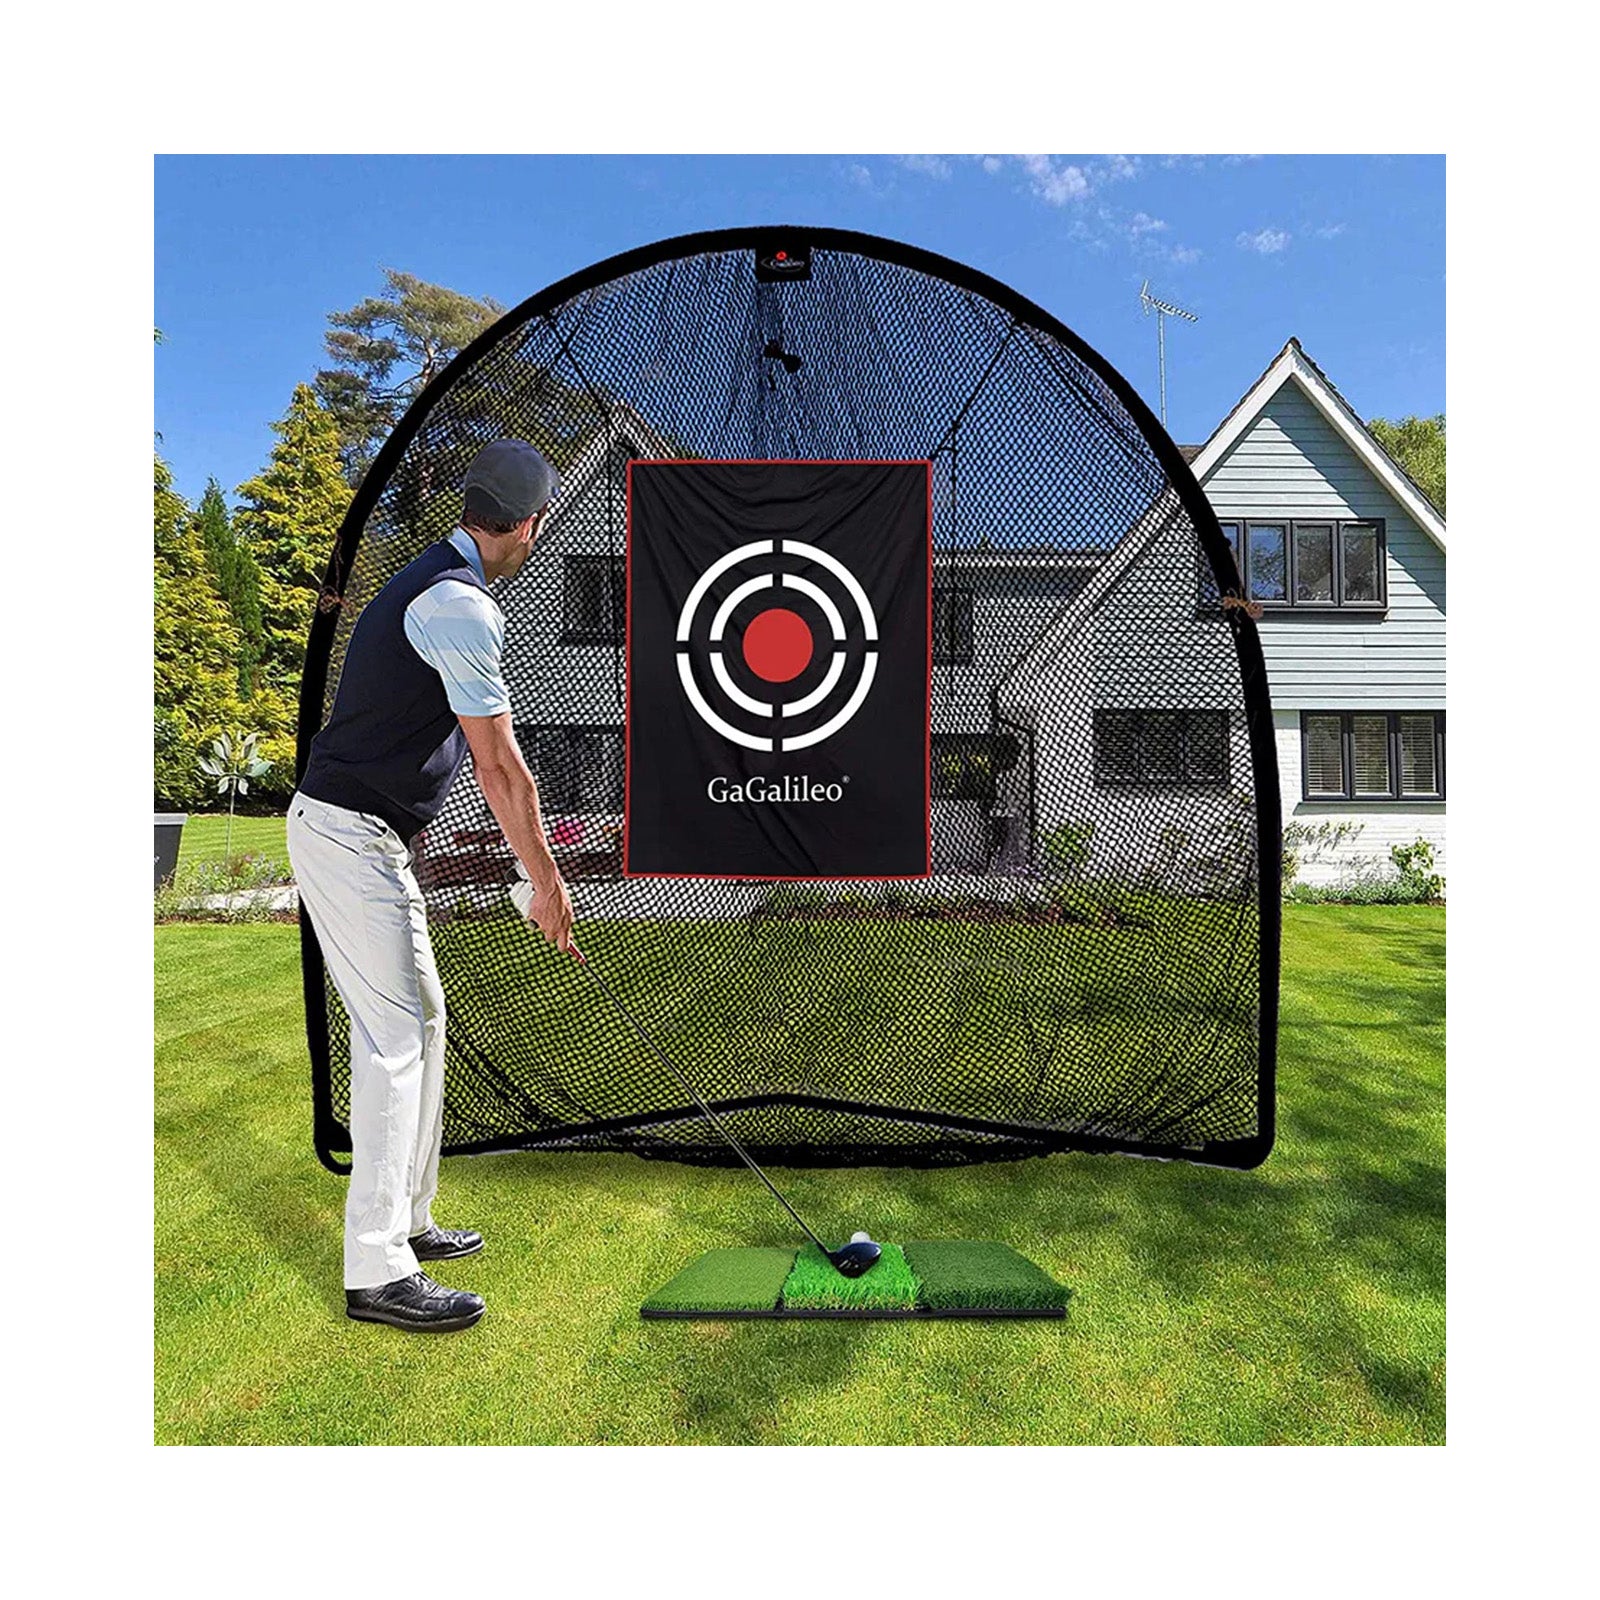 Red de práctica de golf para redes de golpe de golf en elpatio trasero Red de práctica de golf | 8' X 8' X 3.5' | deportiert Galilei